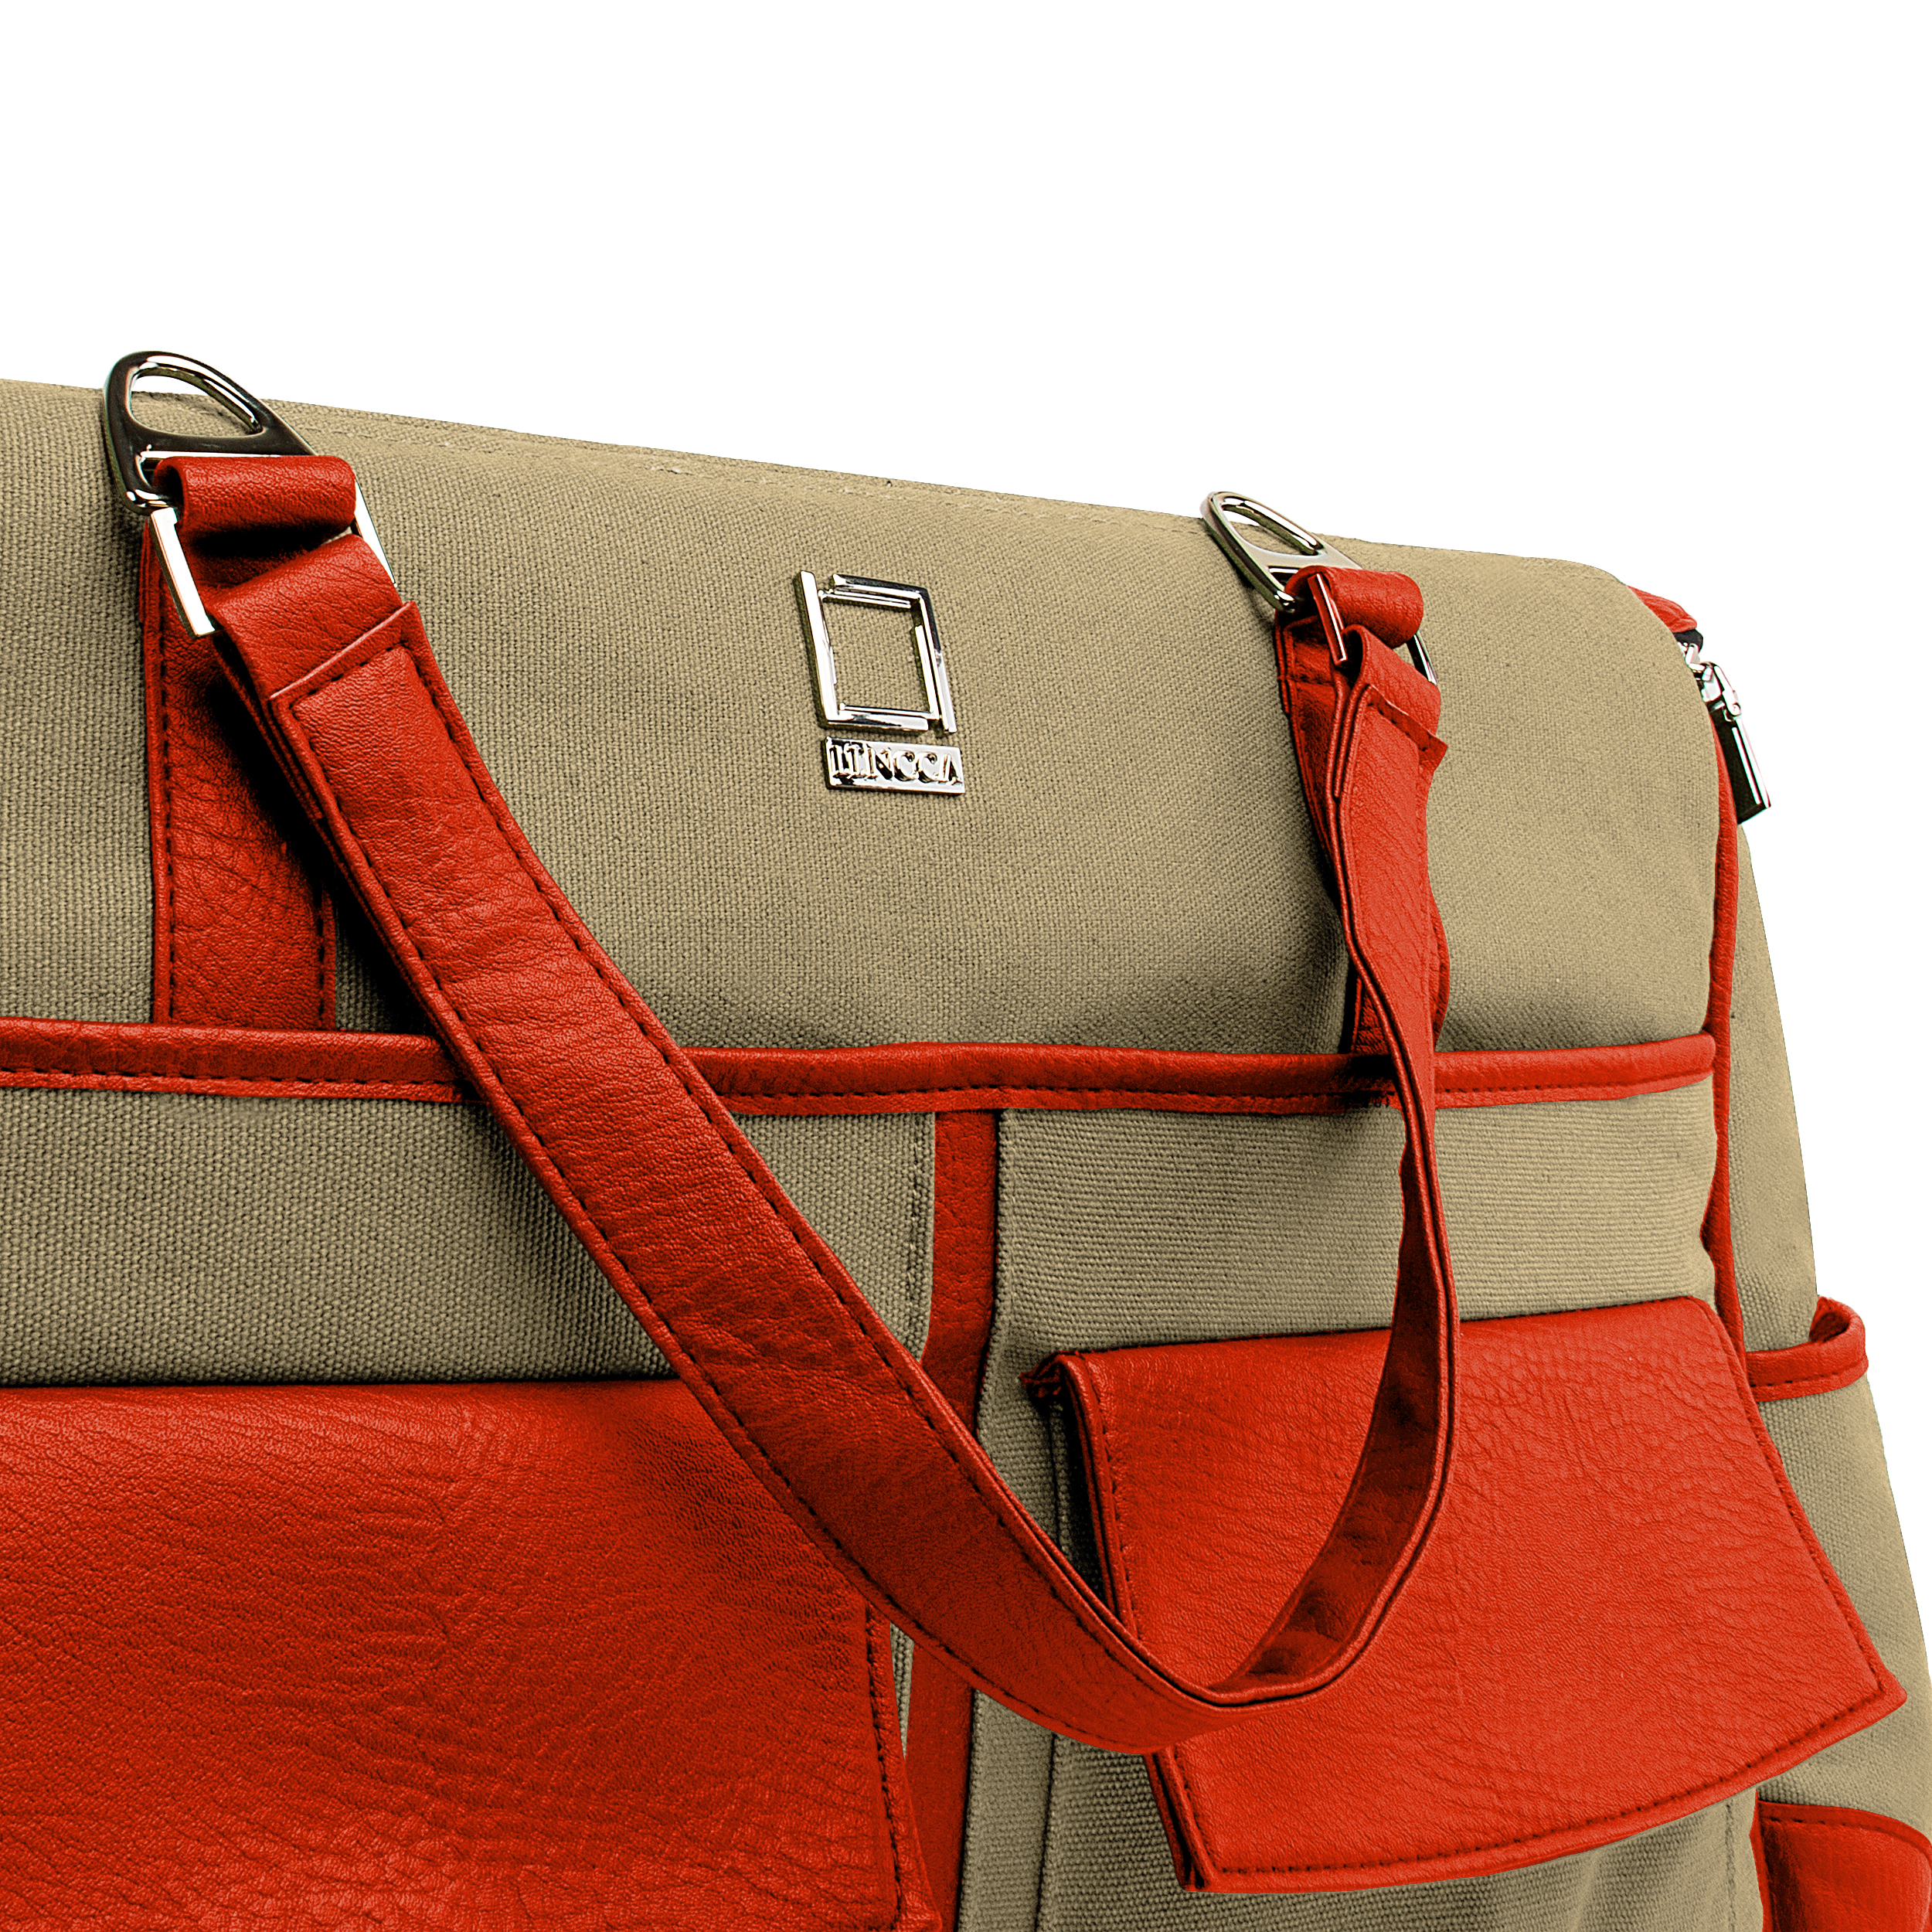 Lencca Alpaque Duffle Bag for 11.6' - 15'6 laptops (Raw Beige / Orange)